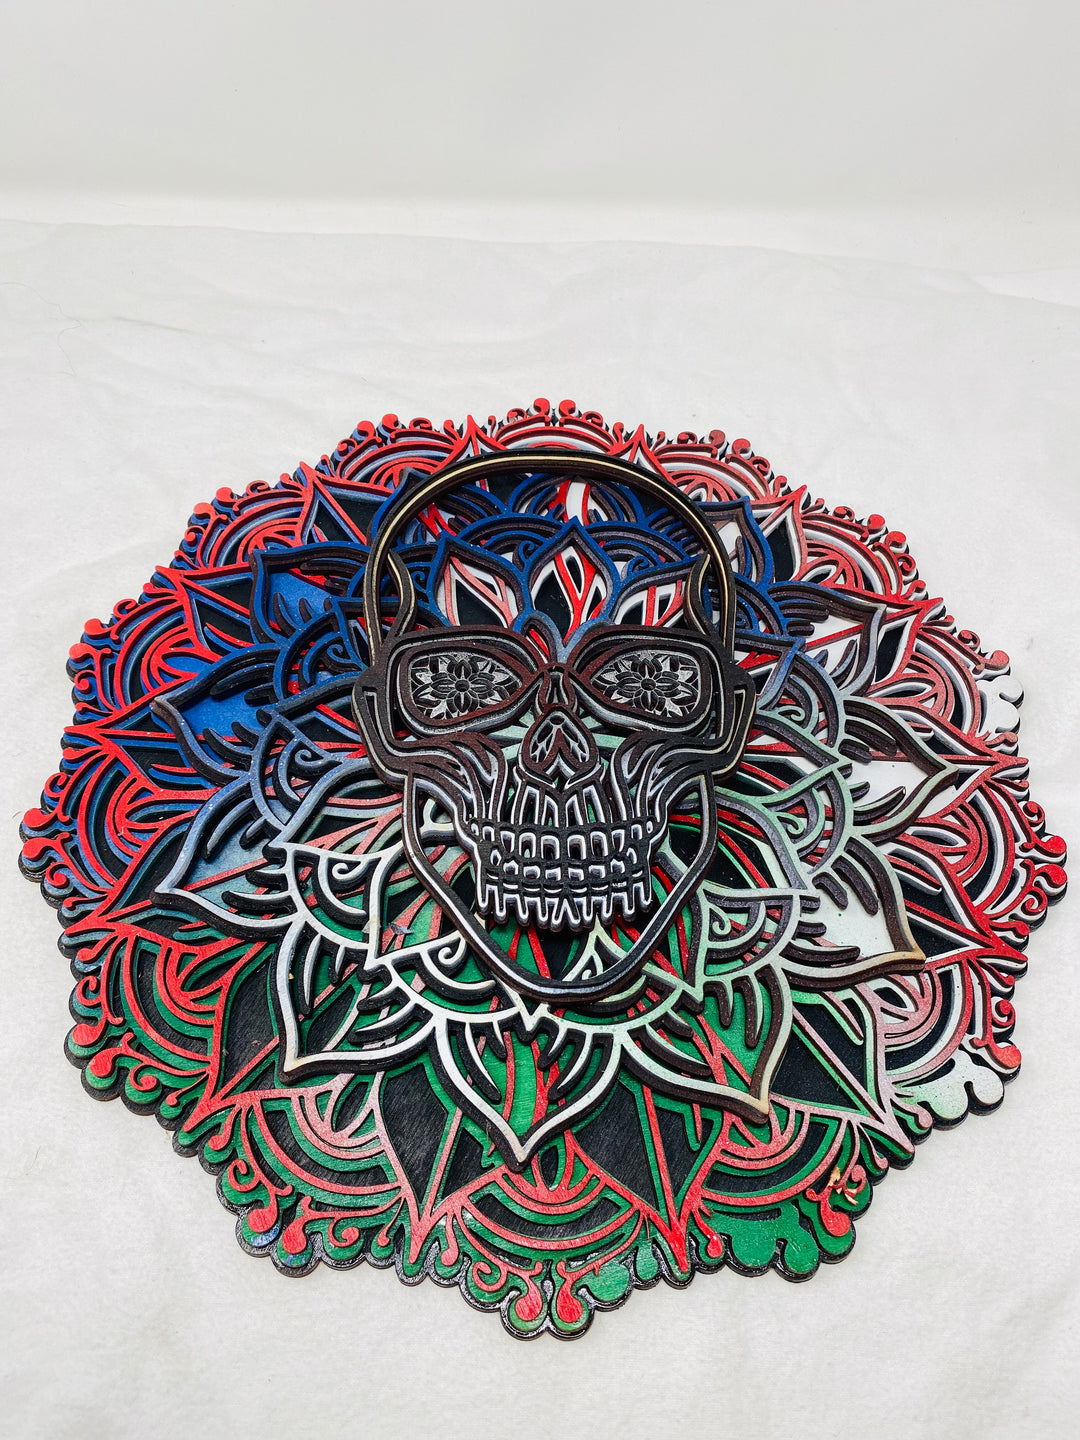 Wall Decoration Candy Sugar Skull Layer Wood Art Mandala 3D Art Multilayer Art Home Decor 5706